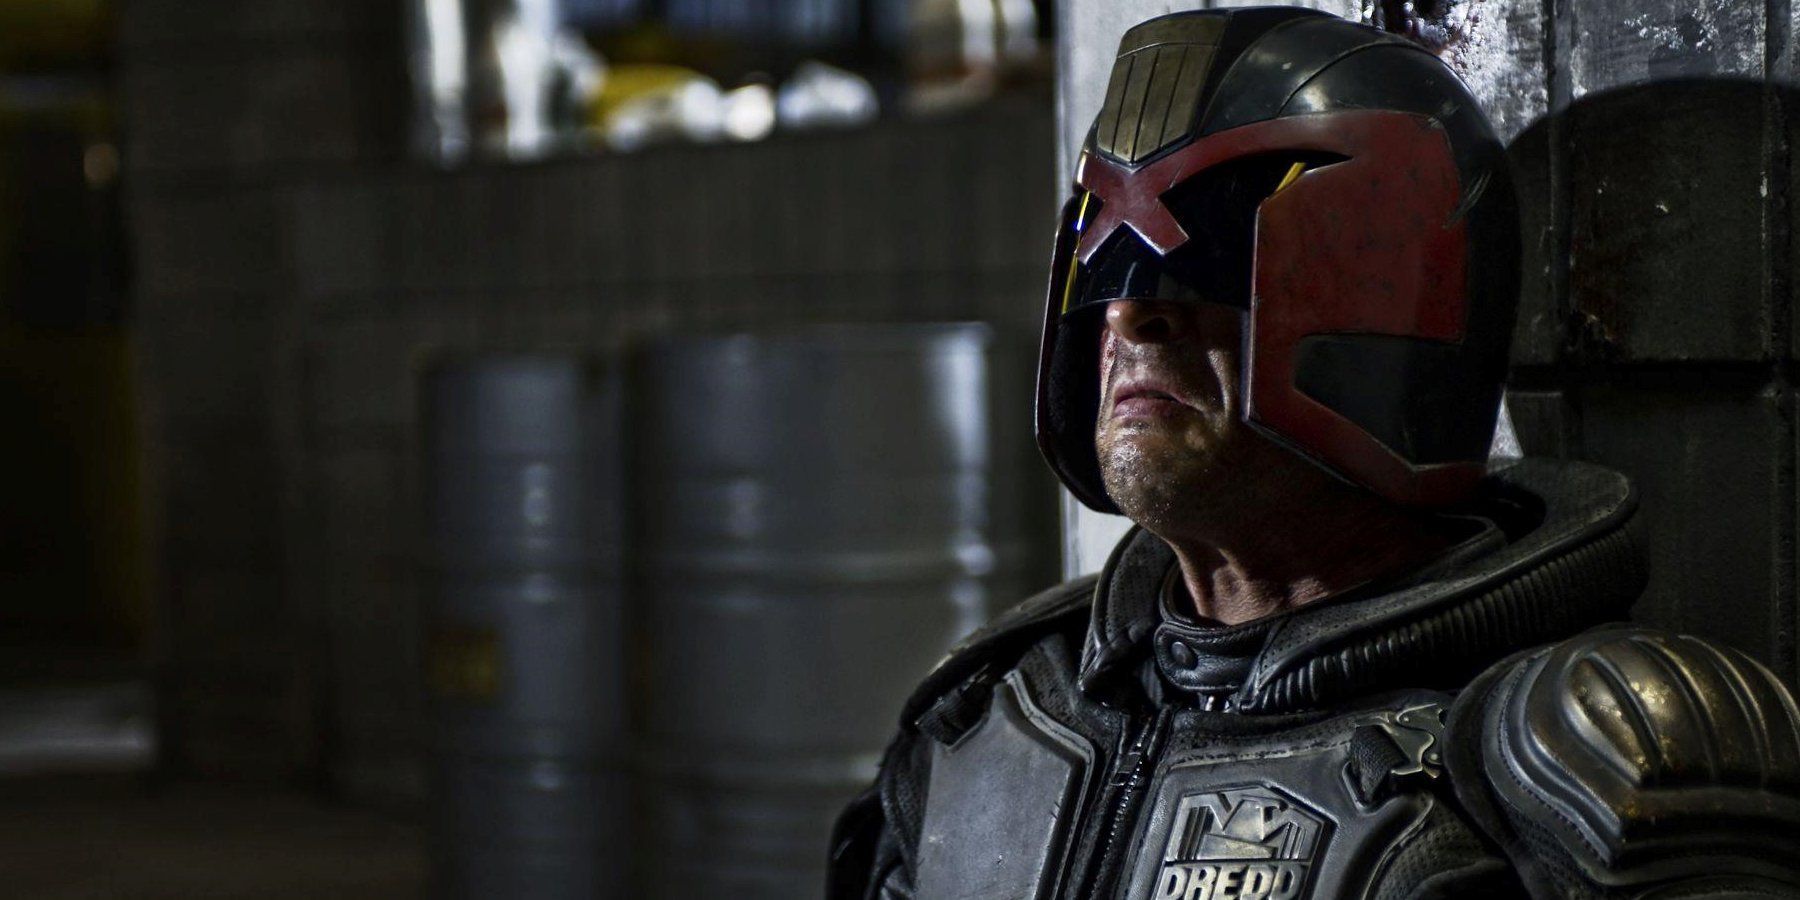 Fan Video Imagines Netflix Title Sequence for Dredd